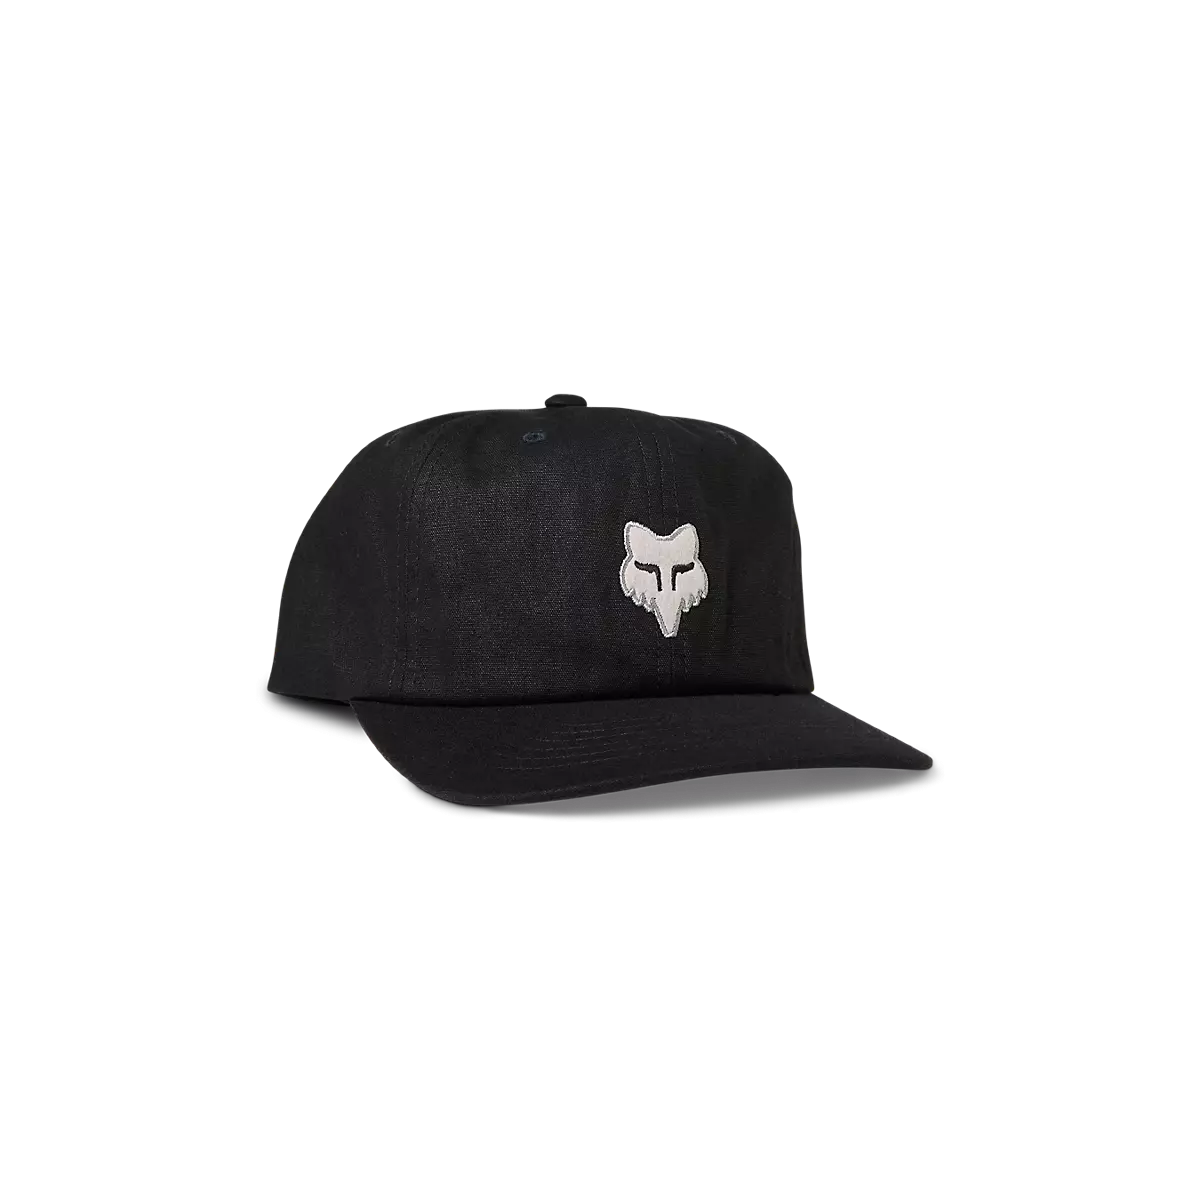 Gorra Fox Alfresco ajustable color negro talla única | 30670-001